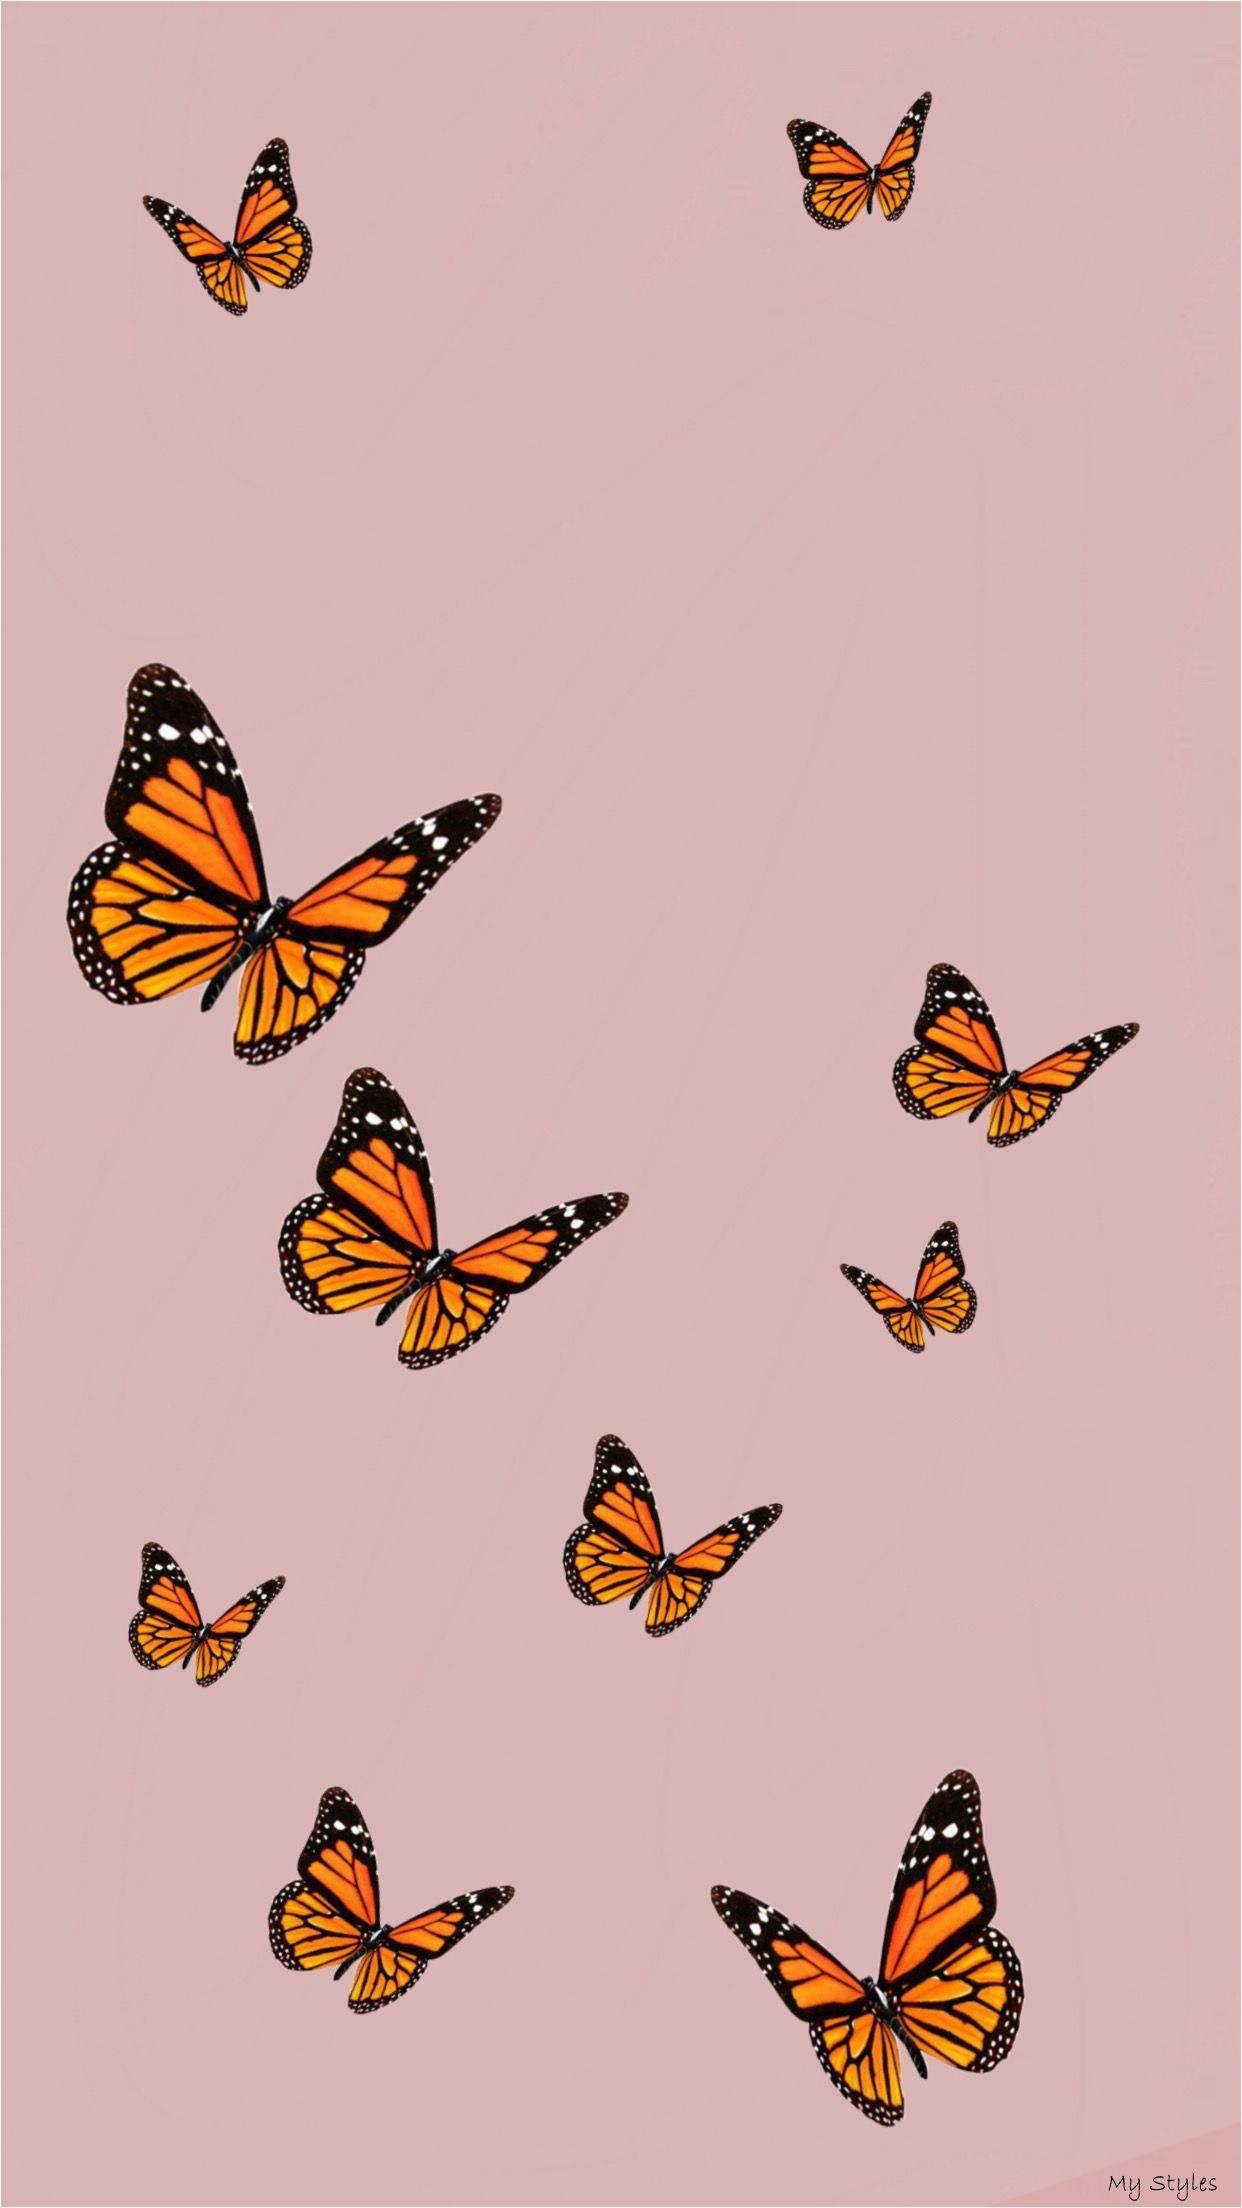 no title) #Butterflies #Aesthetic. Butterfly wallpaper